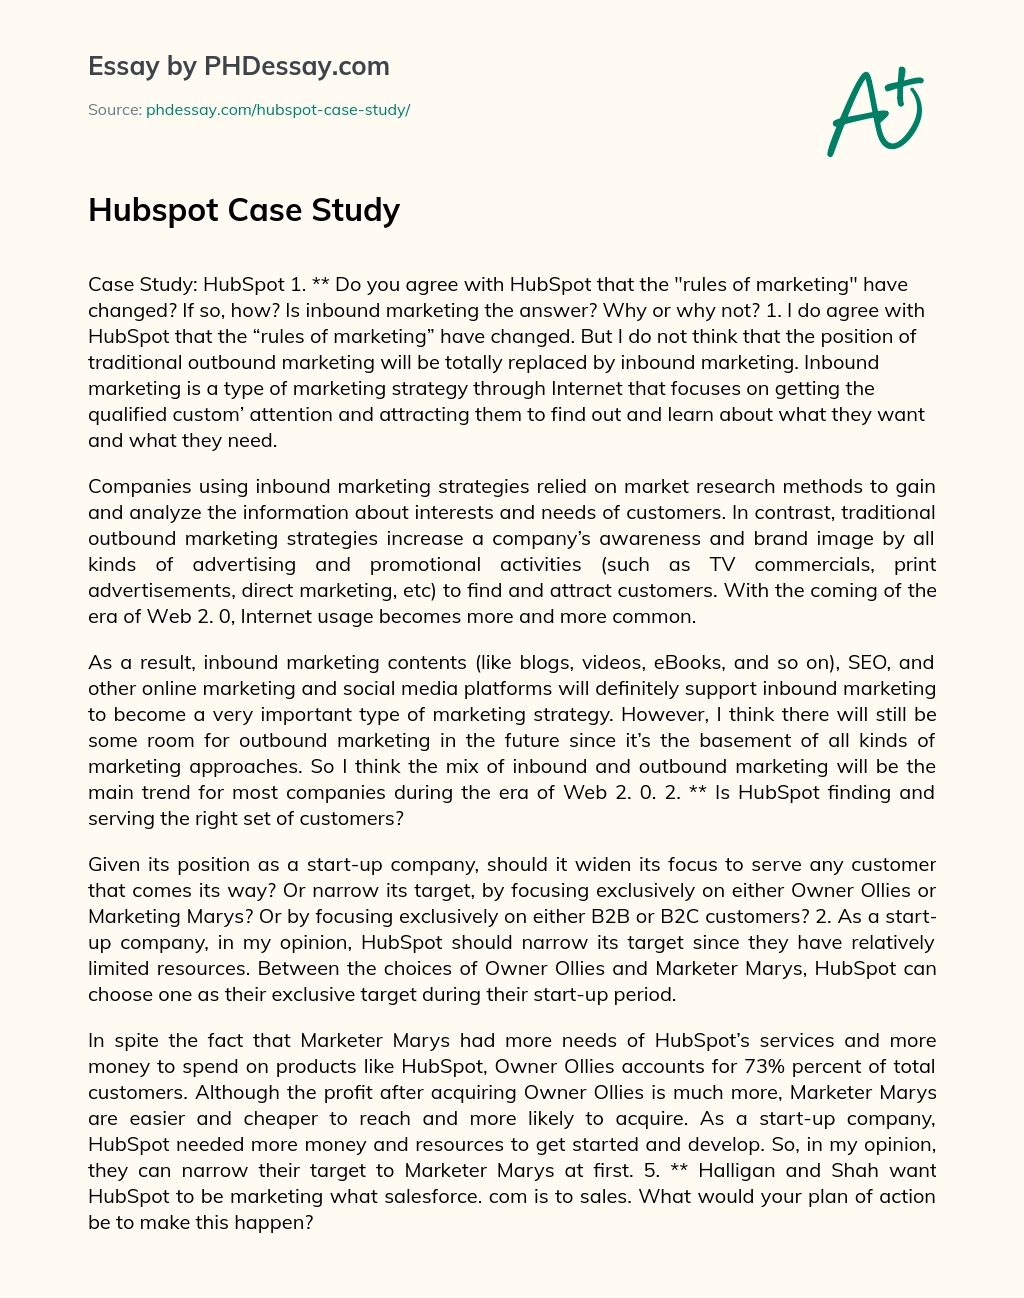 Hubspot Case Study essay